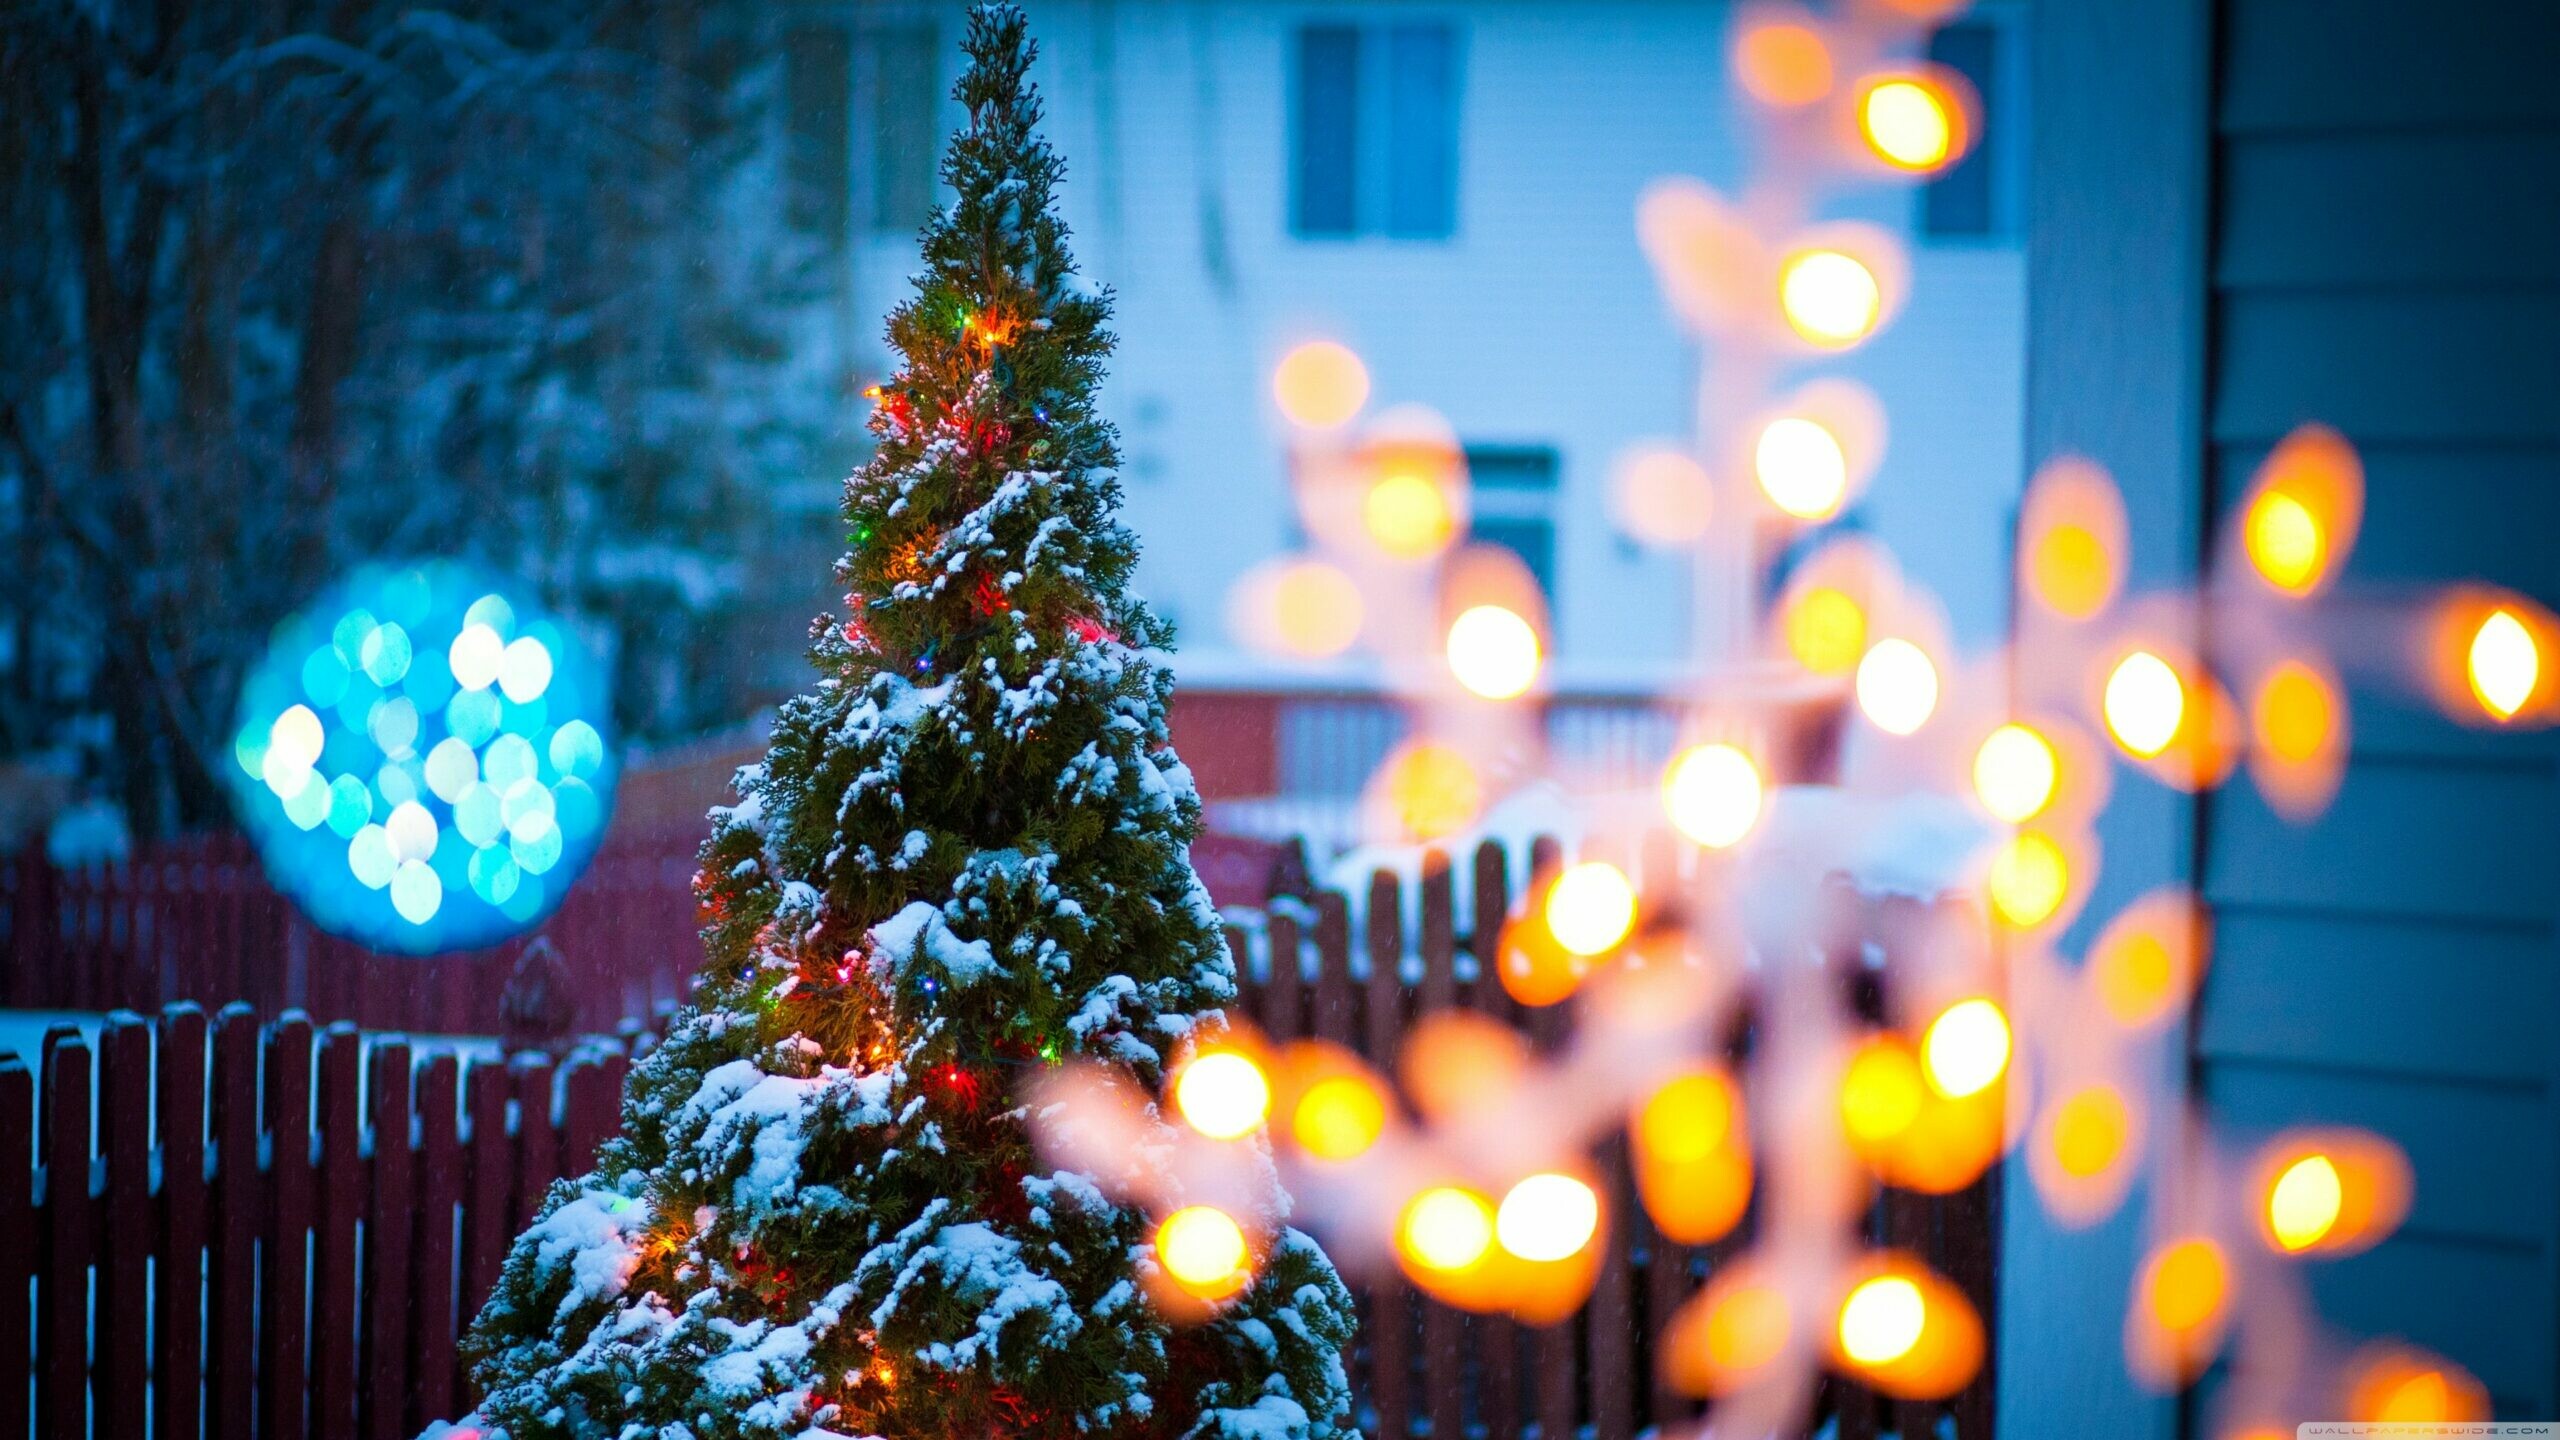 Christmas Ornament: Holiday, Evergreen, Celebration. 2560x1440 HD Wallpaper.